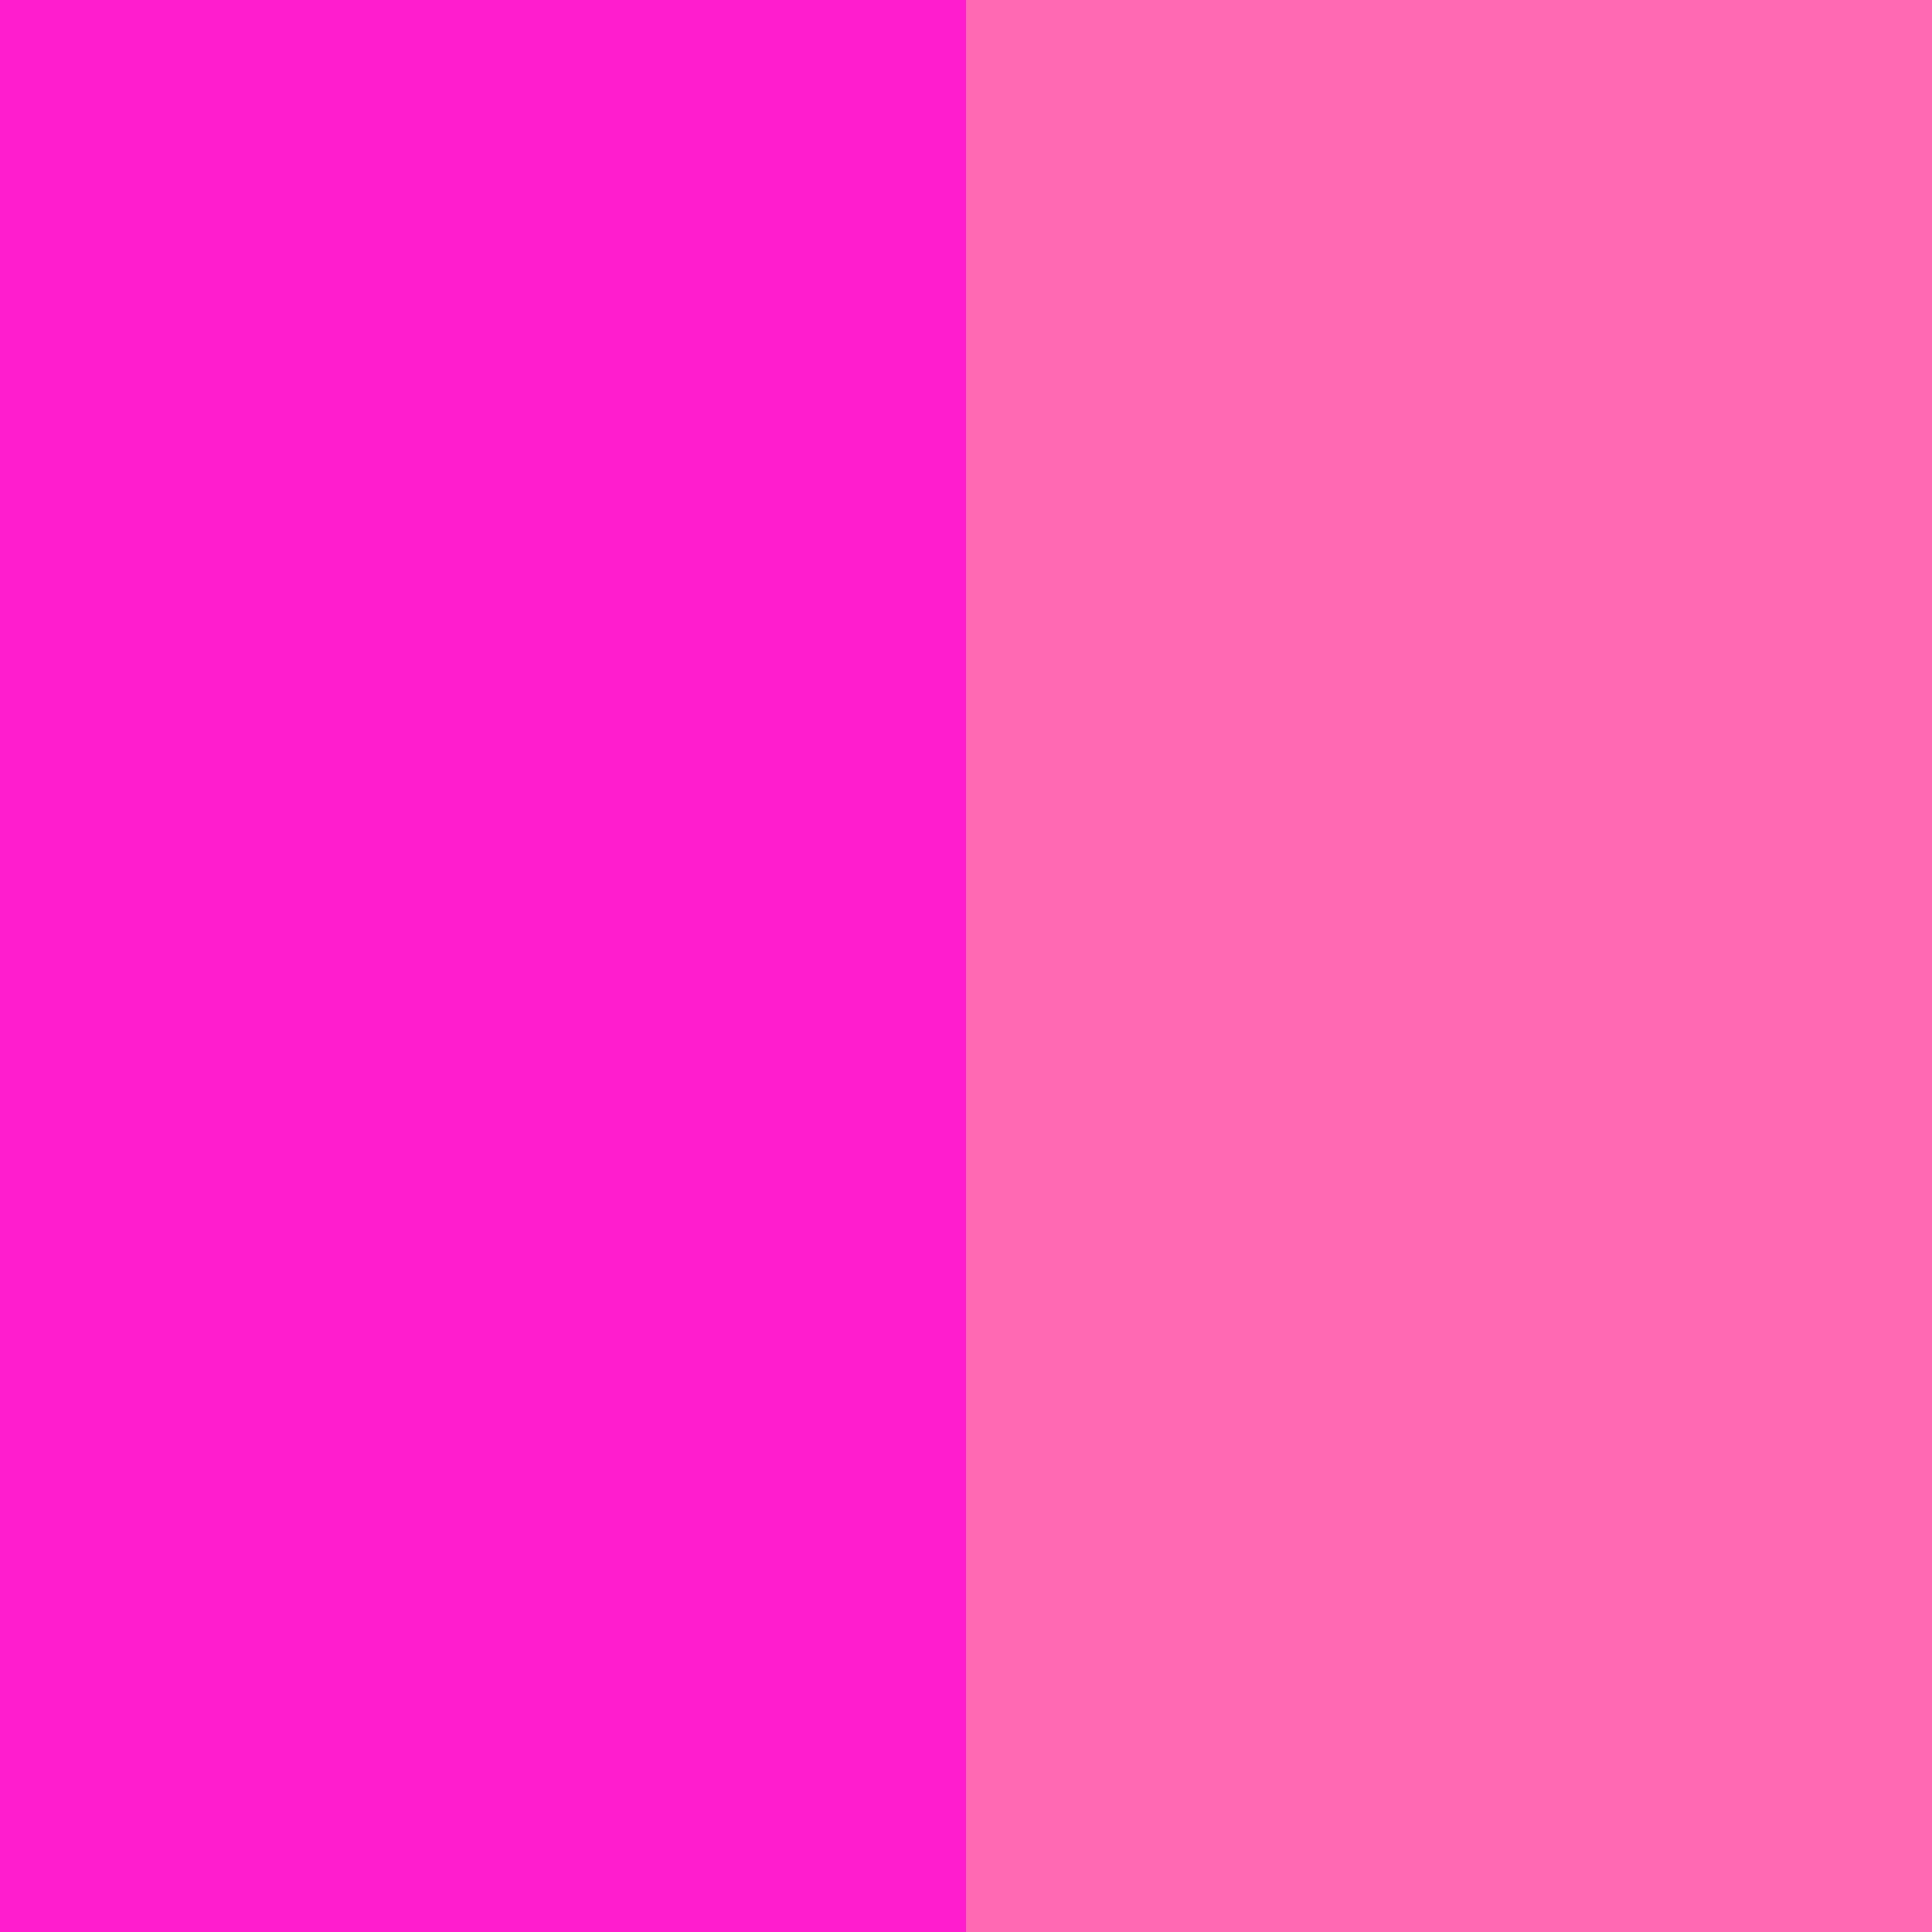 Hot Pink Background Images - Free Download on Freepik